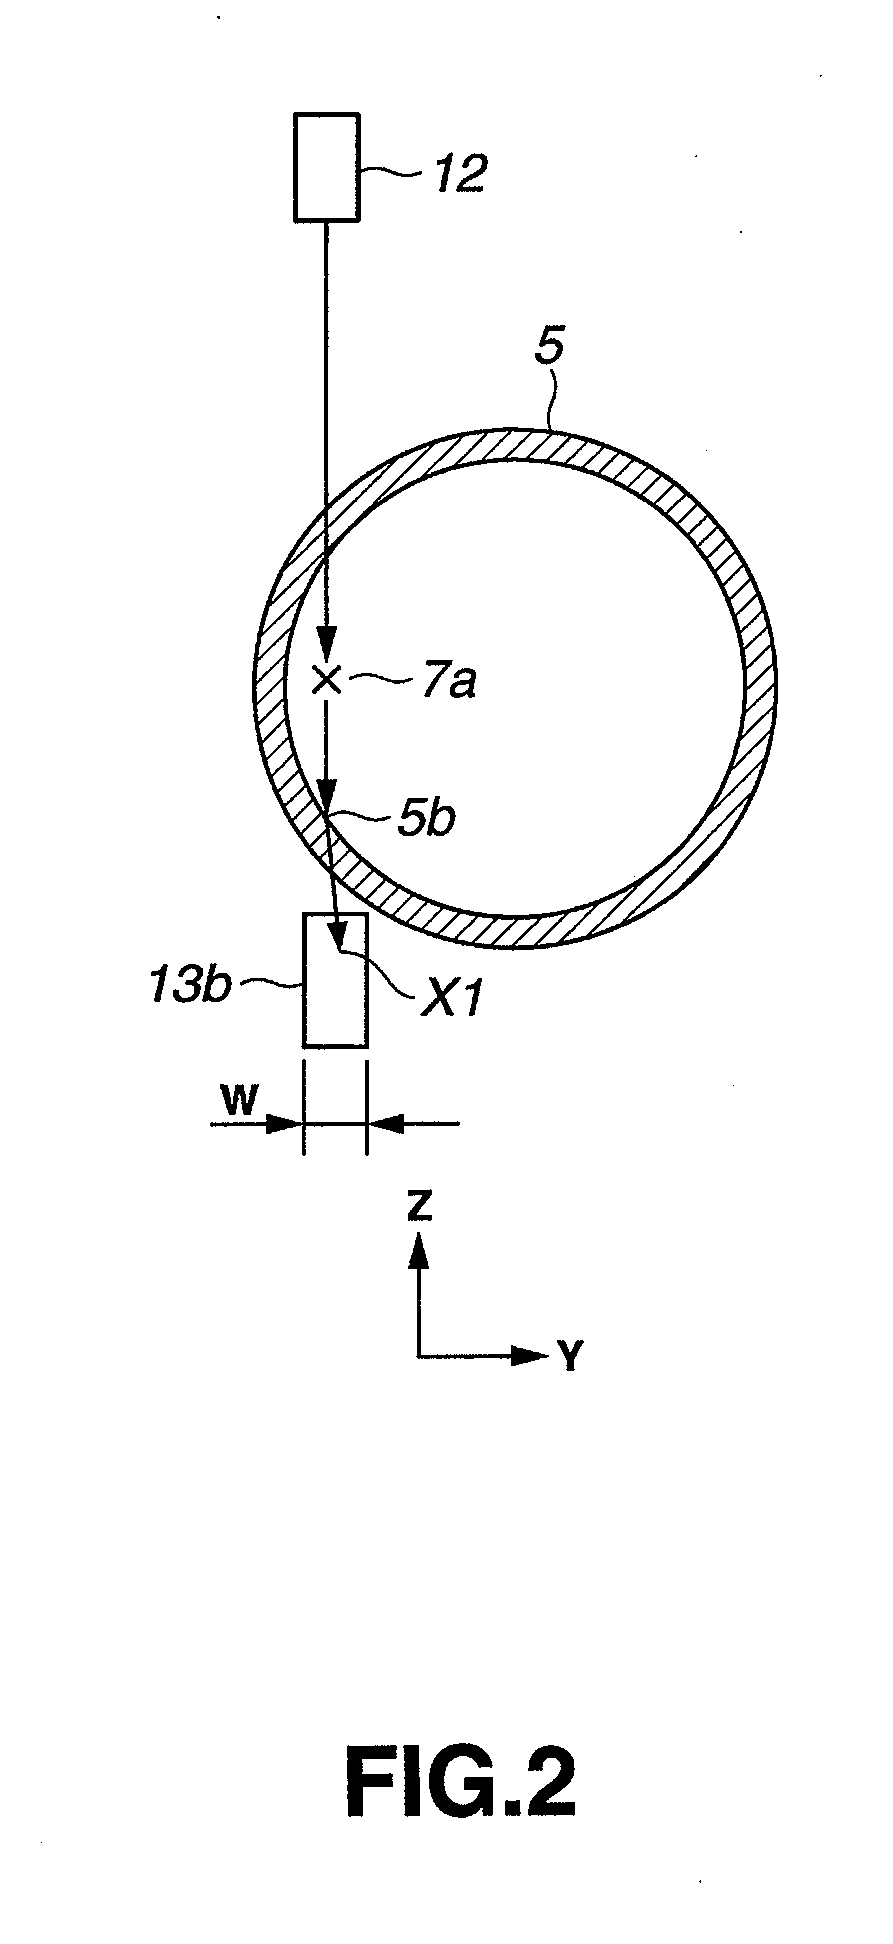 Method for measuring liquid level in single crystal pulling apparatus employing cz method